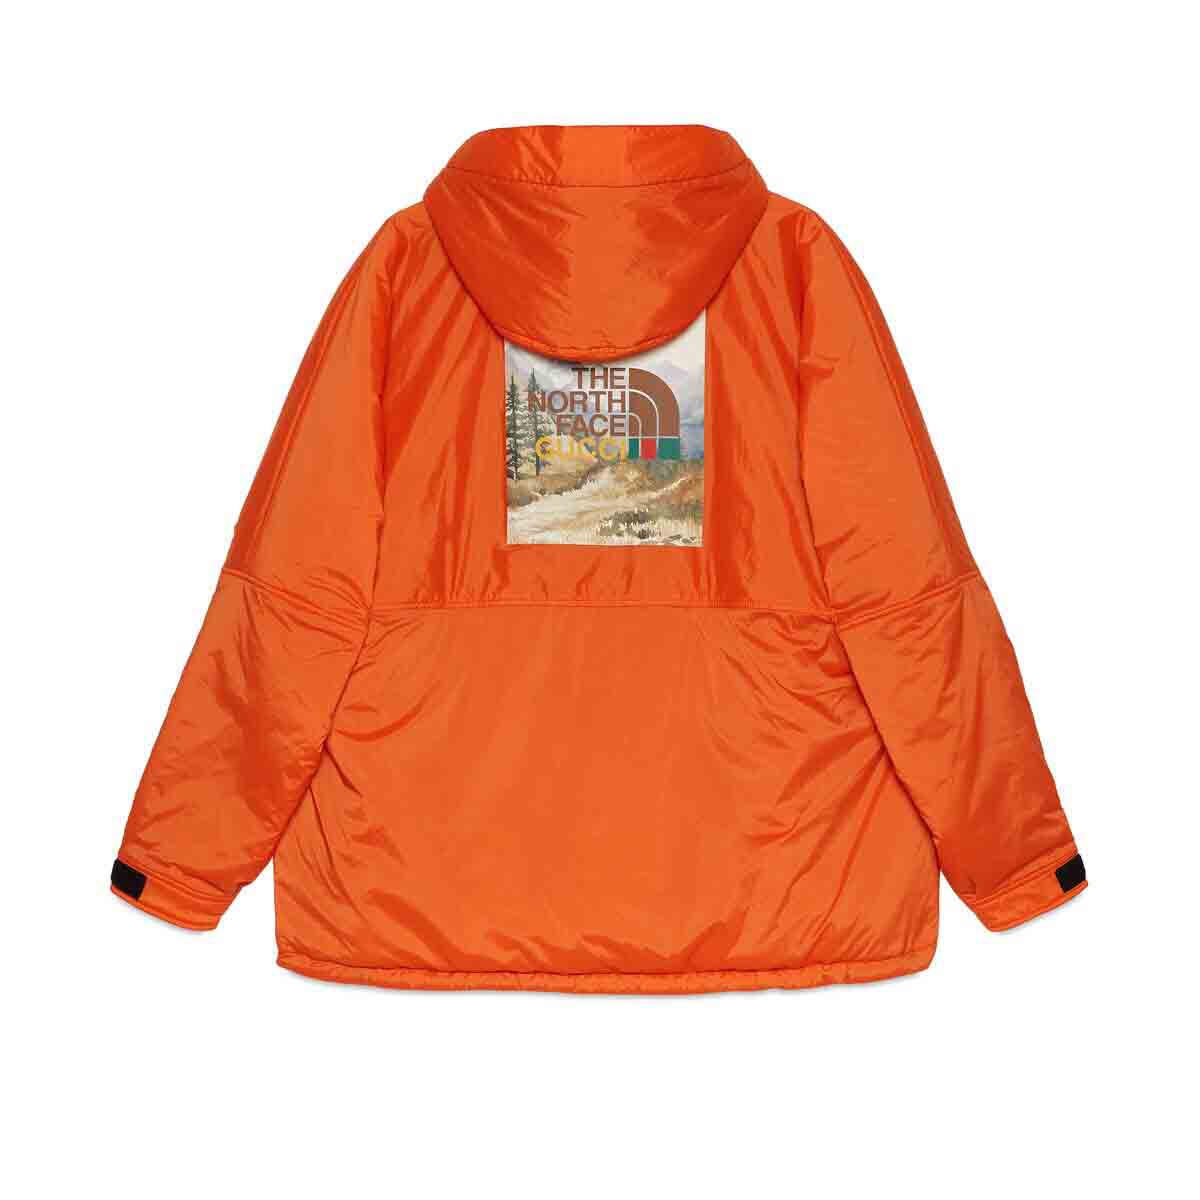 Gucci x The North Face Anorak Jacket Orange